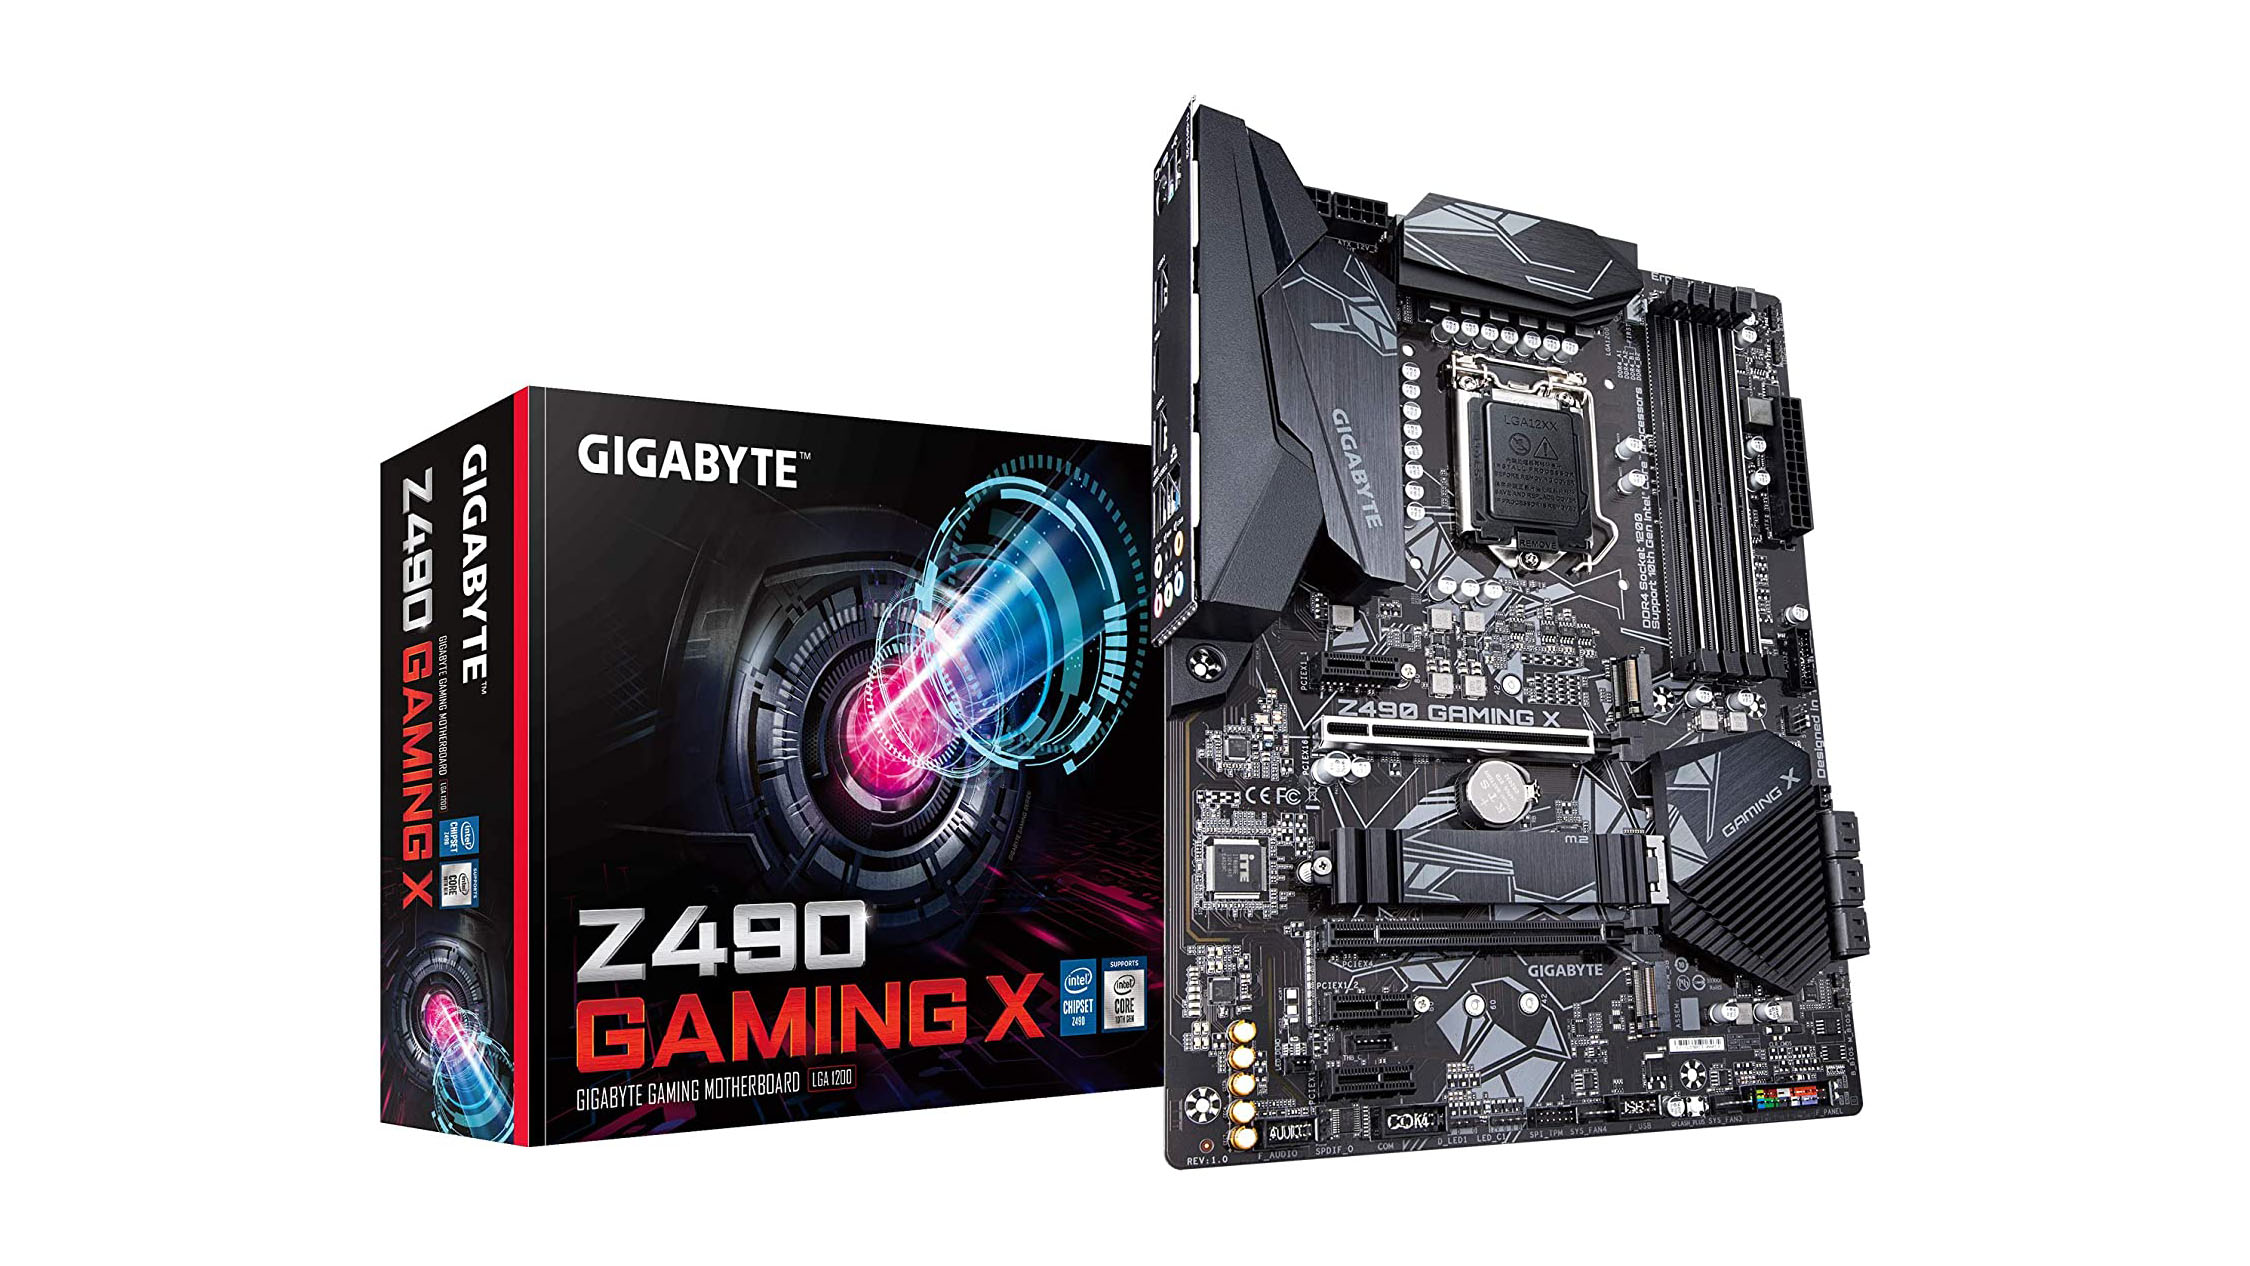 GIGABYTE Z490 Gaming X เป็นตัวเลือกที่ยอดเยี่ยมสำหรับแฟน Intel ที่ต้องการเมนบอร์ดใหม่ในราคาประหยัด